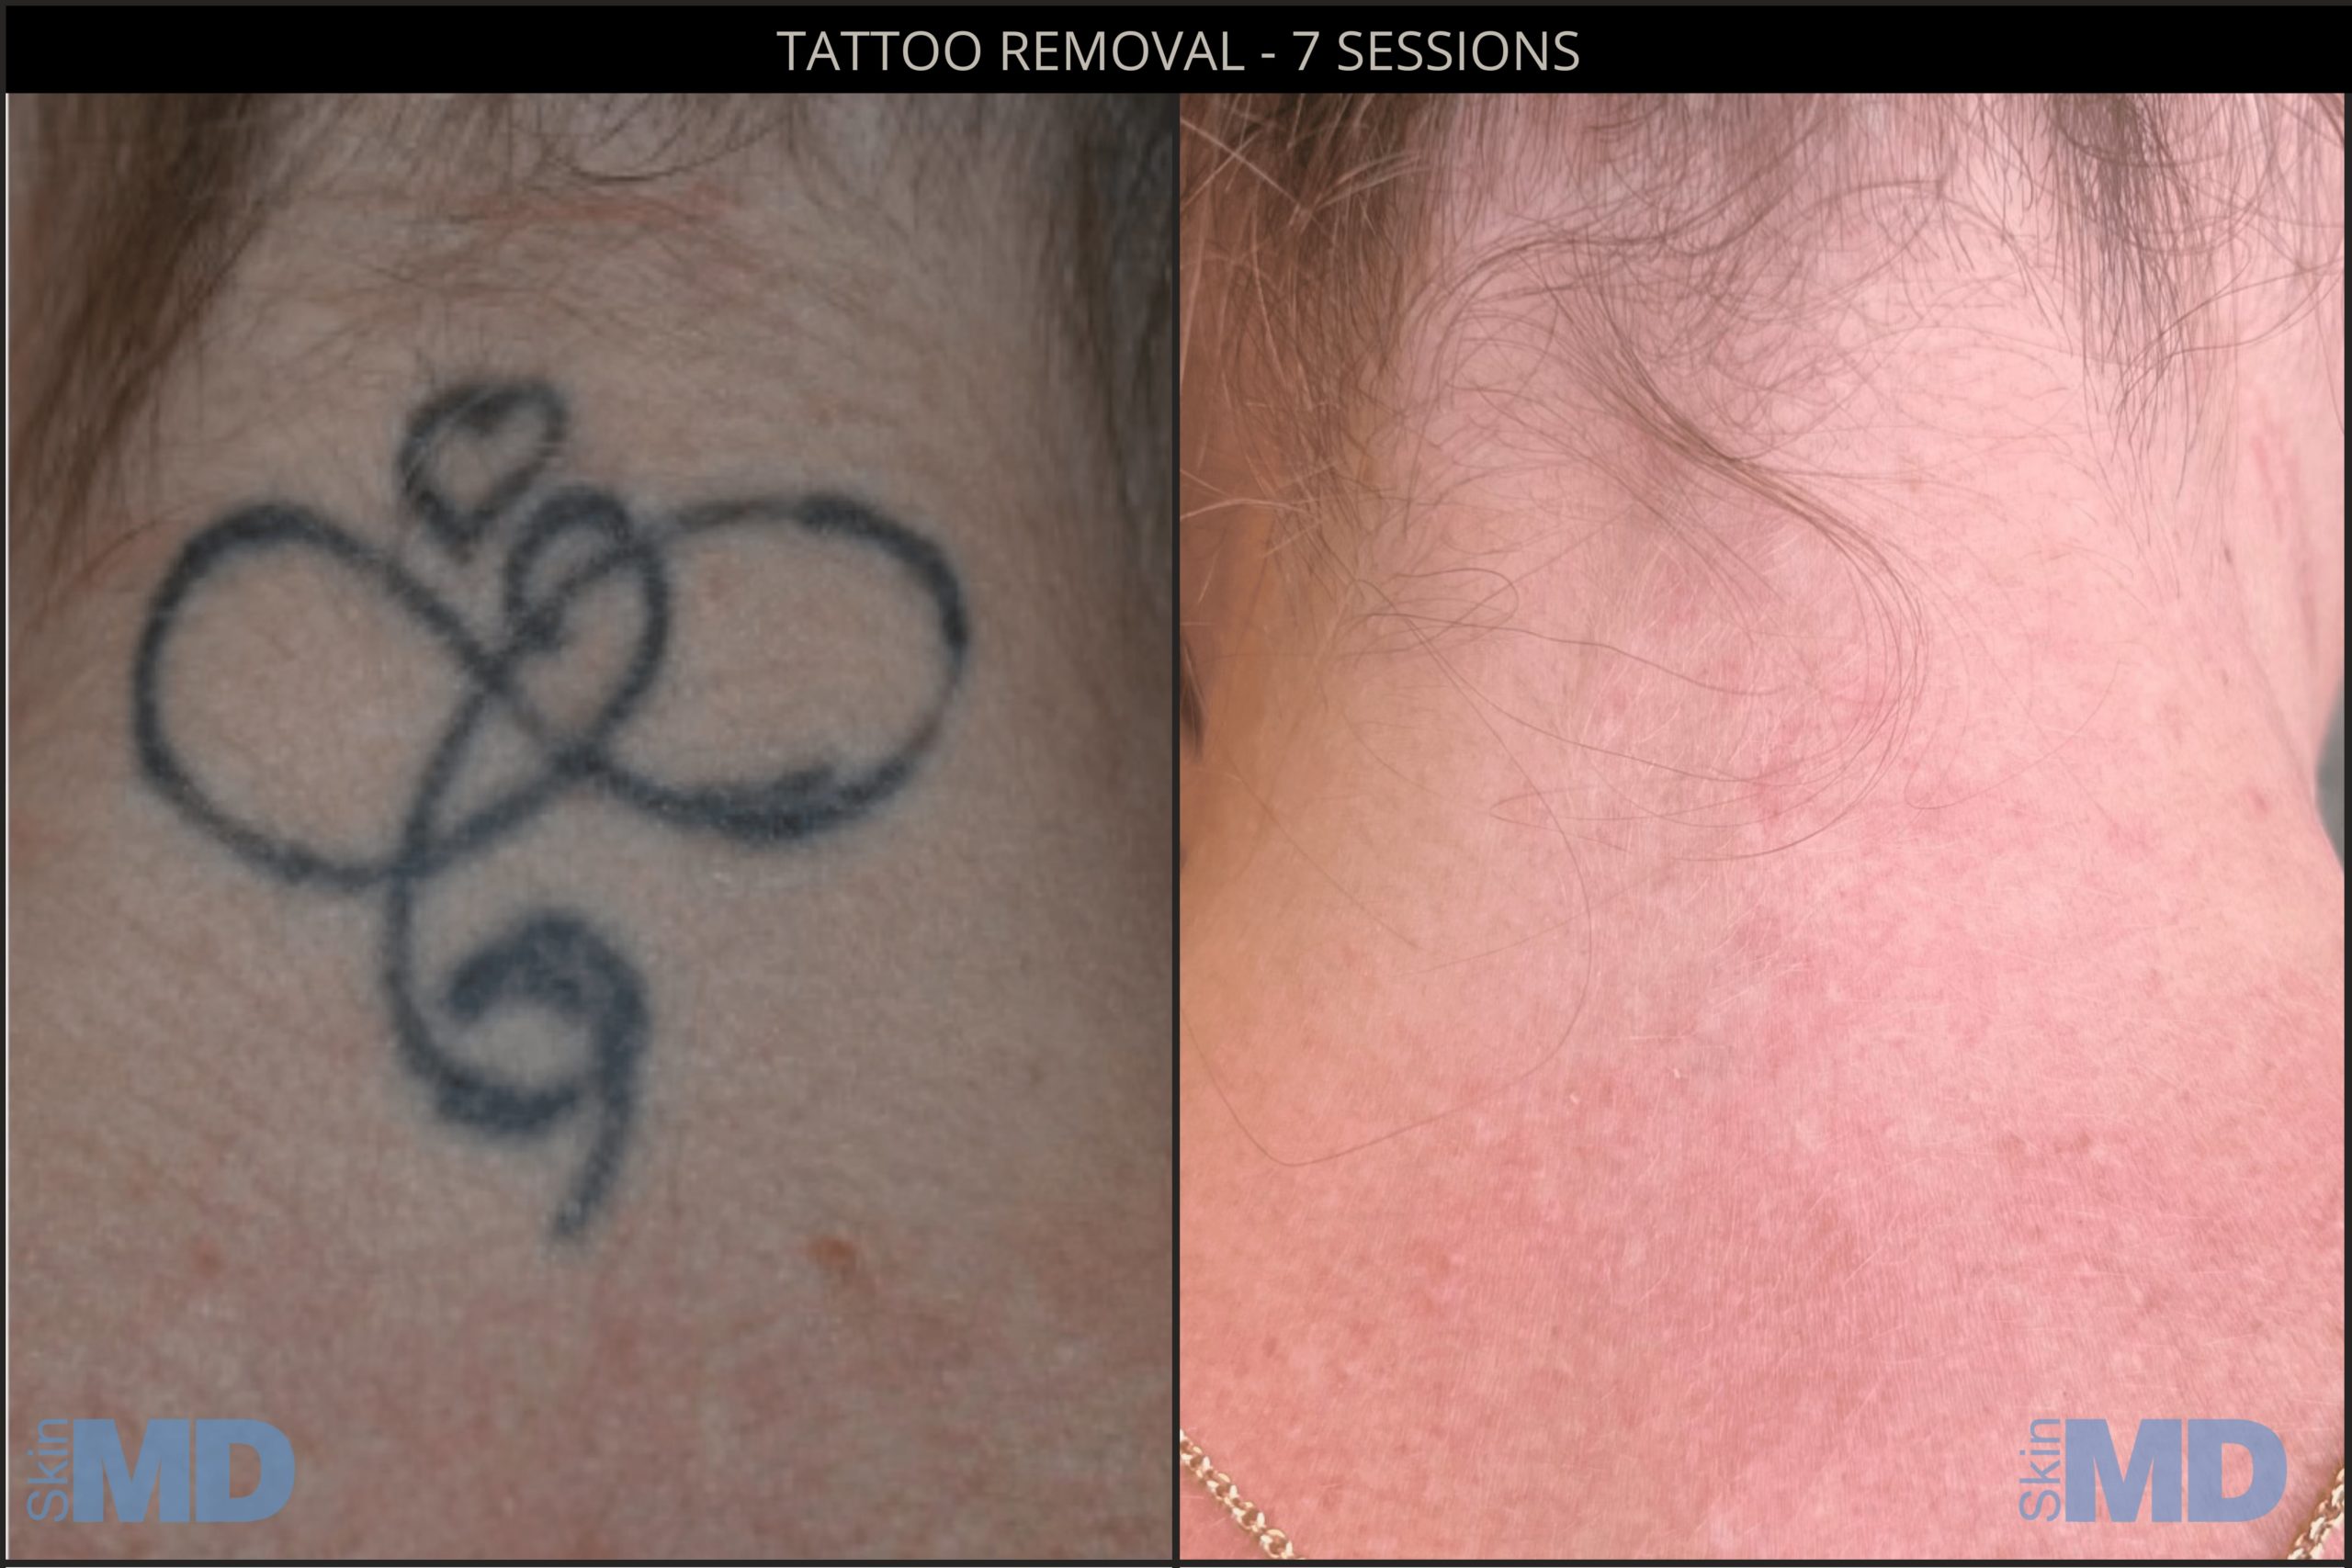 Pico Laser Tattoo Removal | Boston - Skin MD